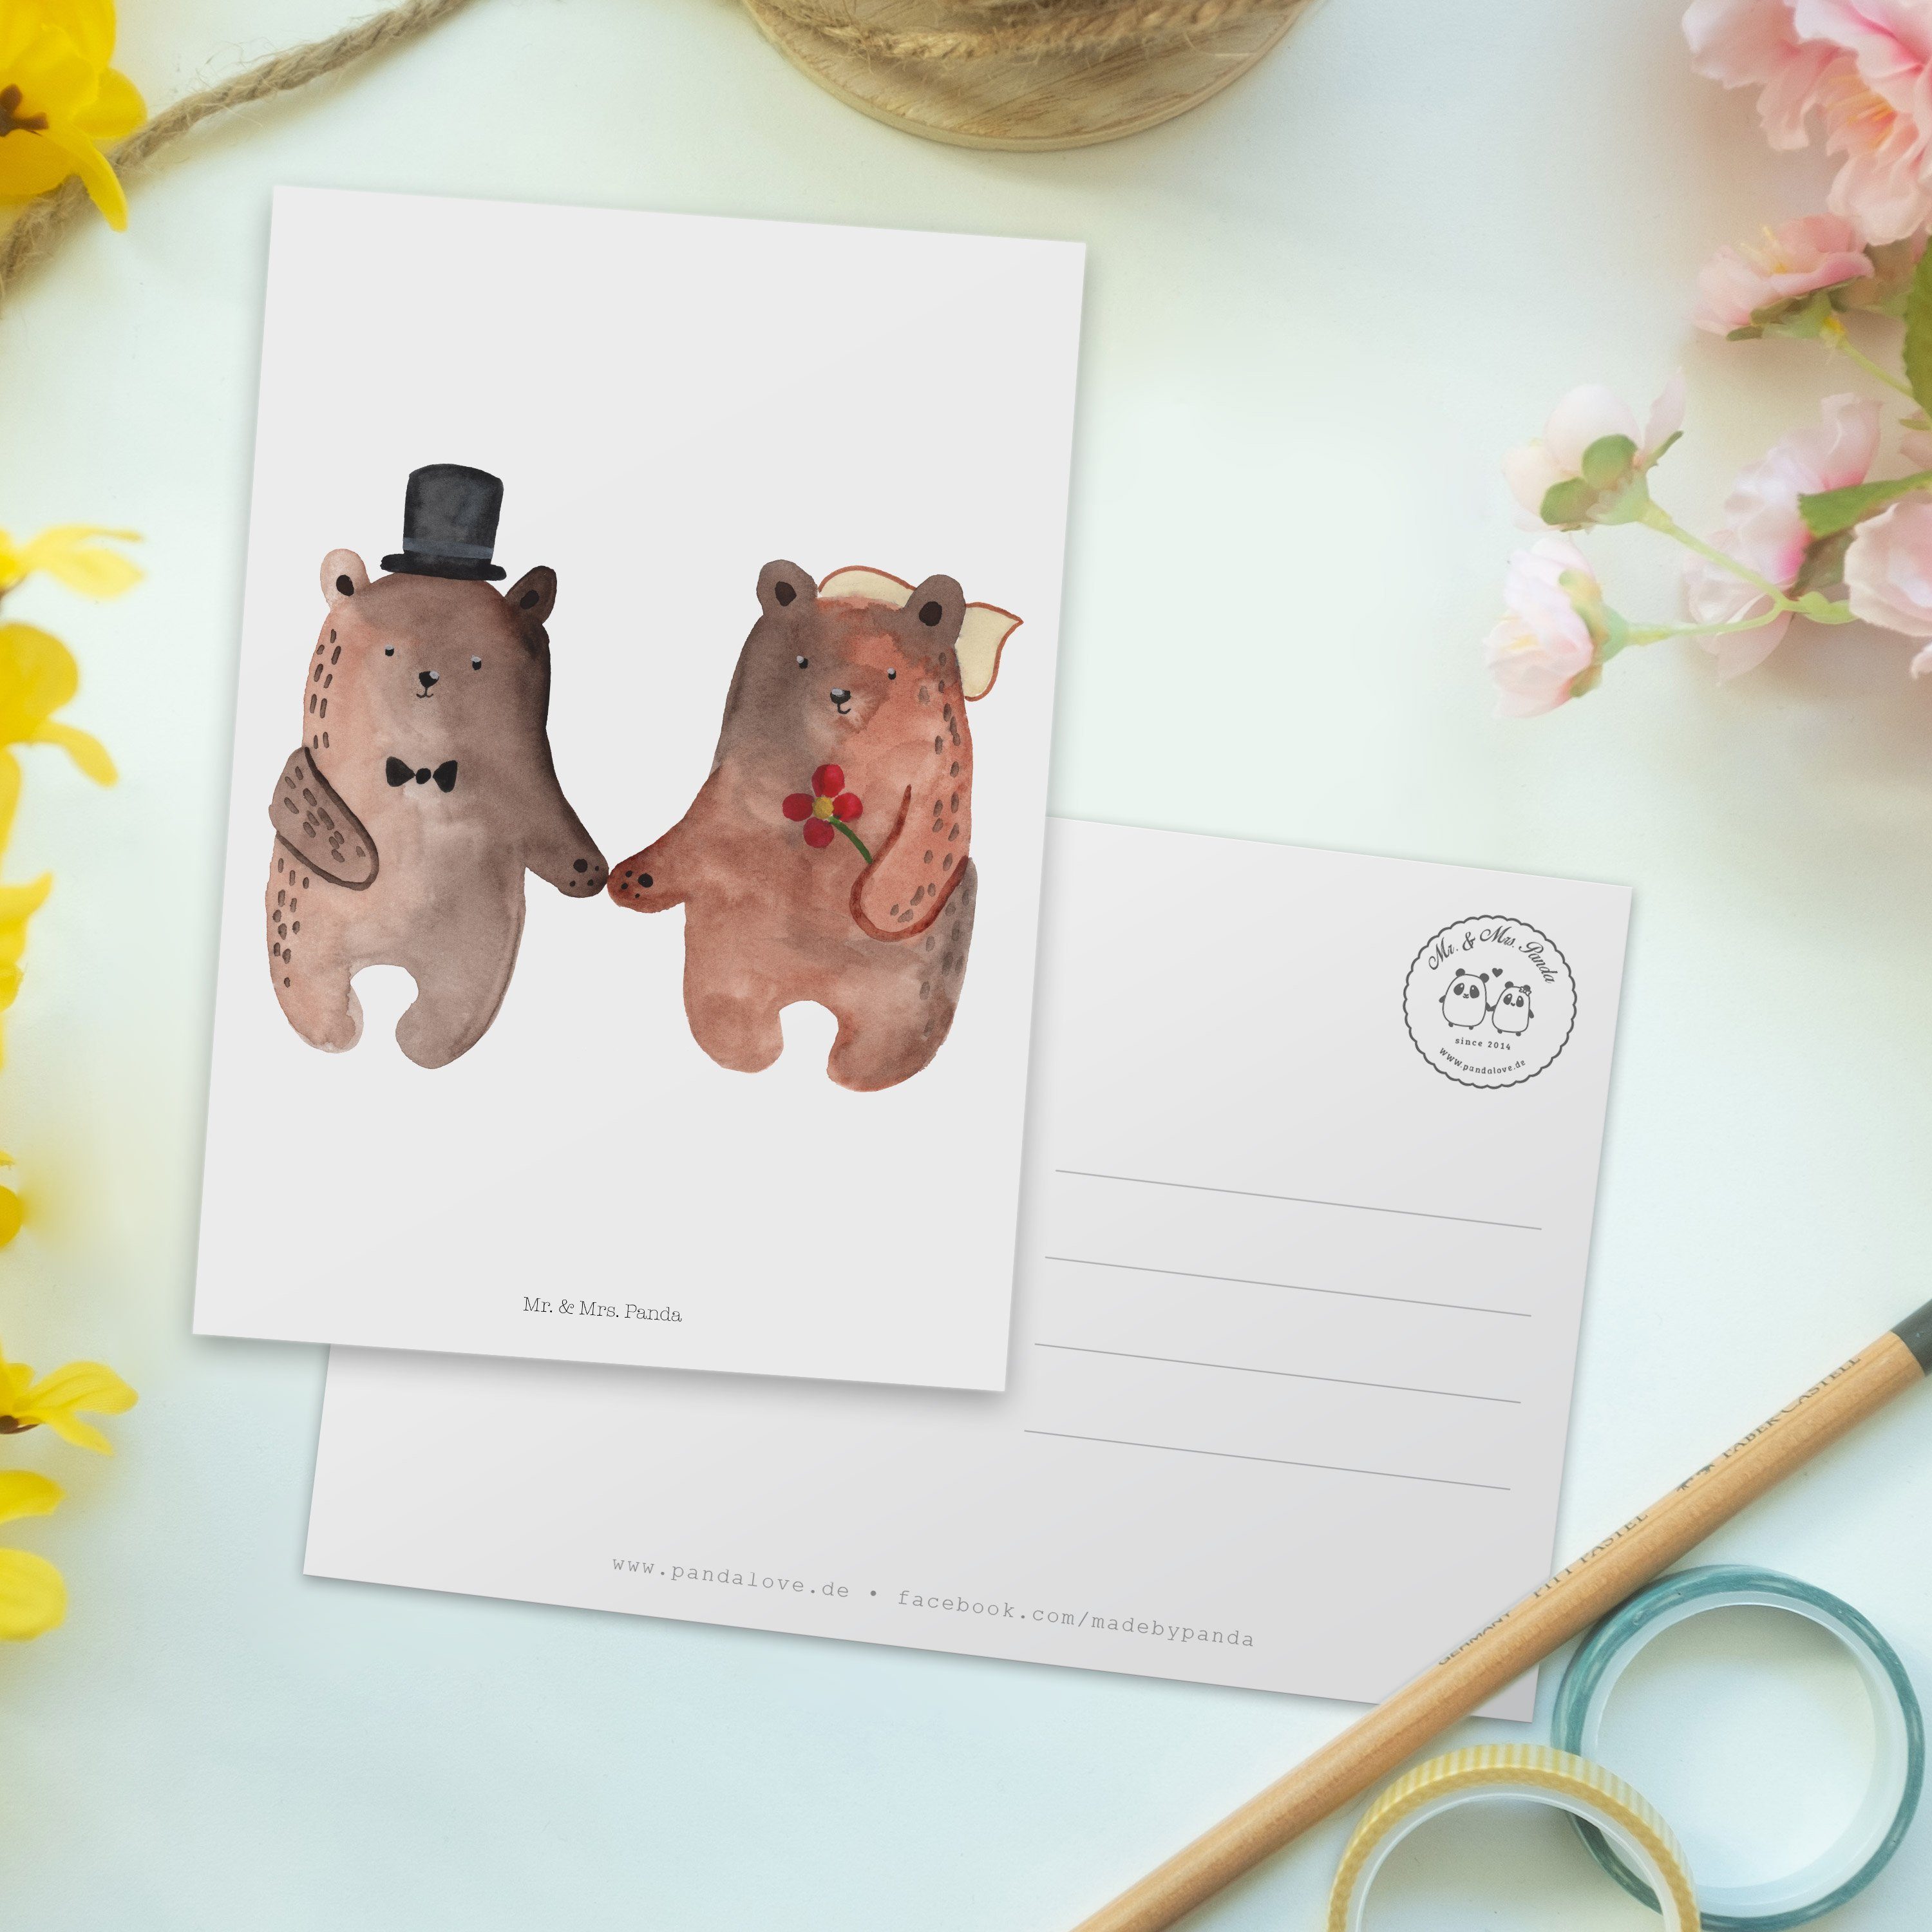 Einladungskarte, Mrs. Heirat Postkarte Dankeskarte Grußkarte, & Geschenk, - Bär Weiß Panda - Mr.